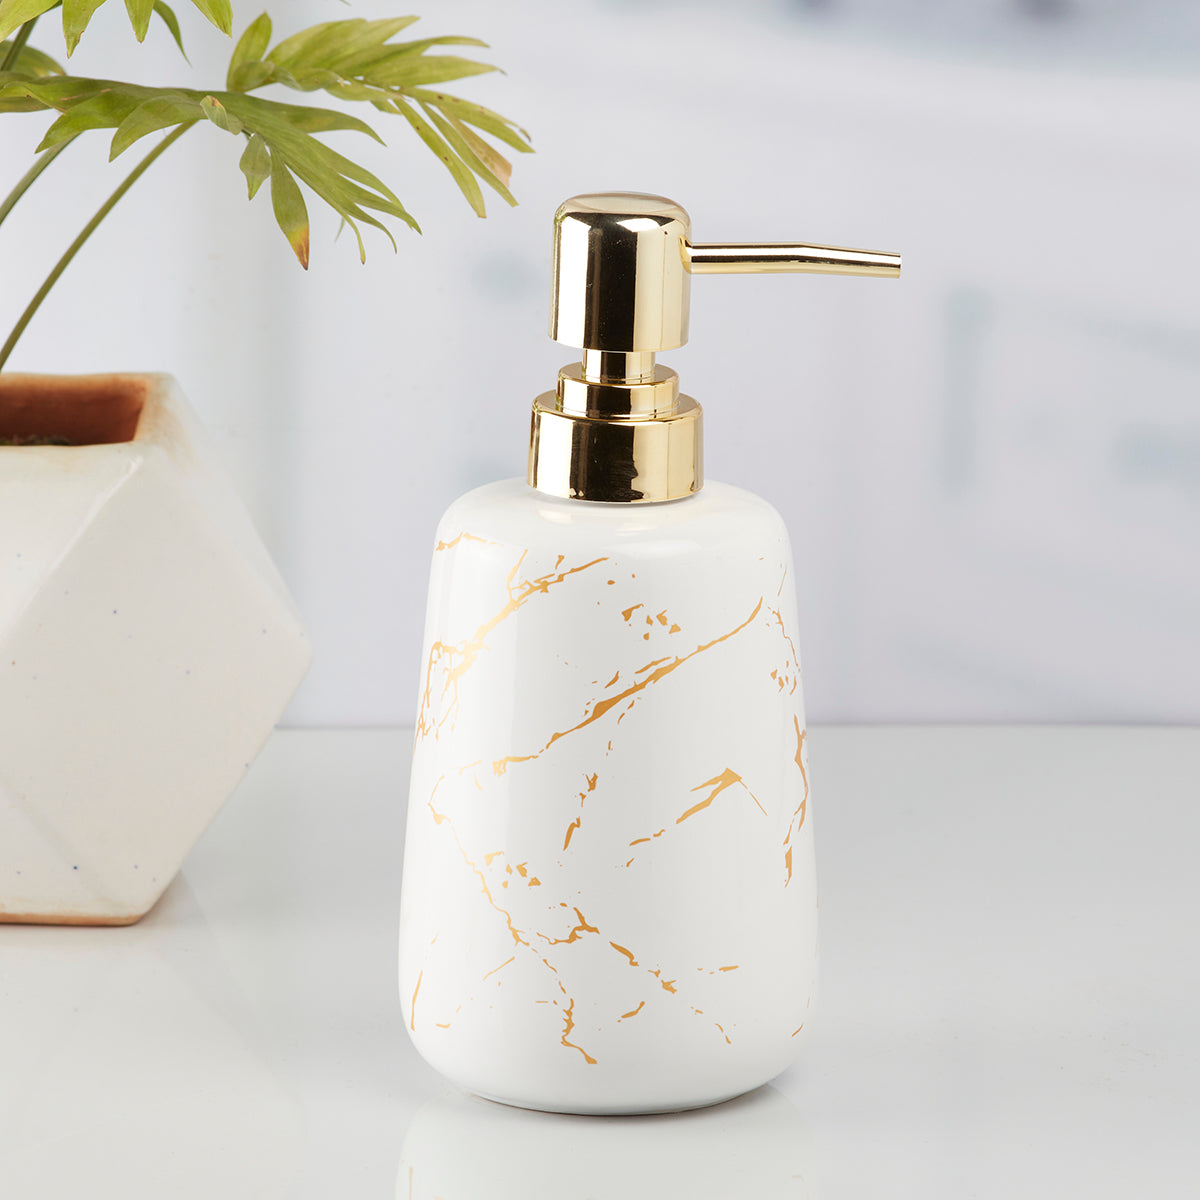 Ceramic Soap Dispenser handwash Pump for Bathroom, Set of 1, Grey/Gold (10201)